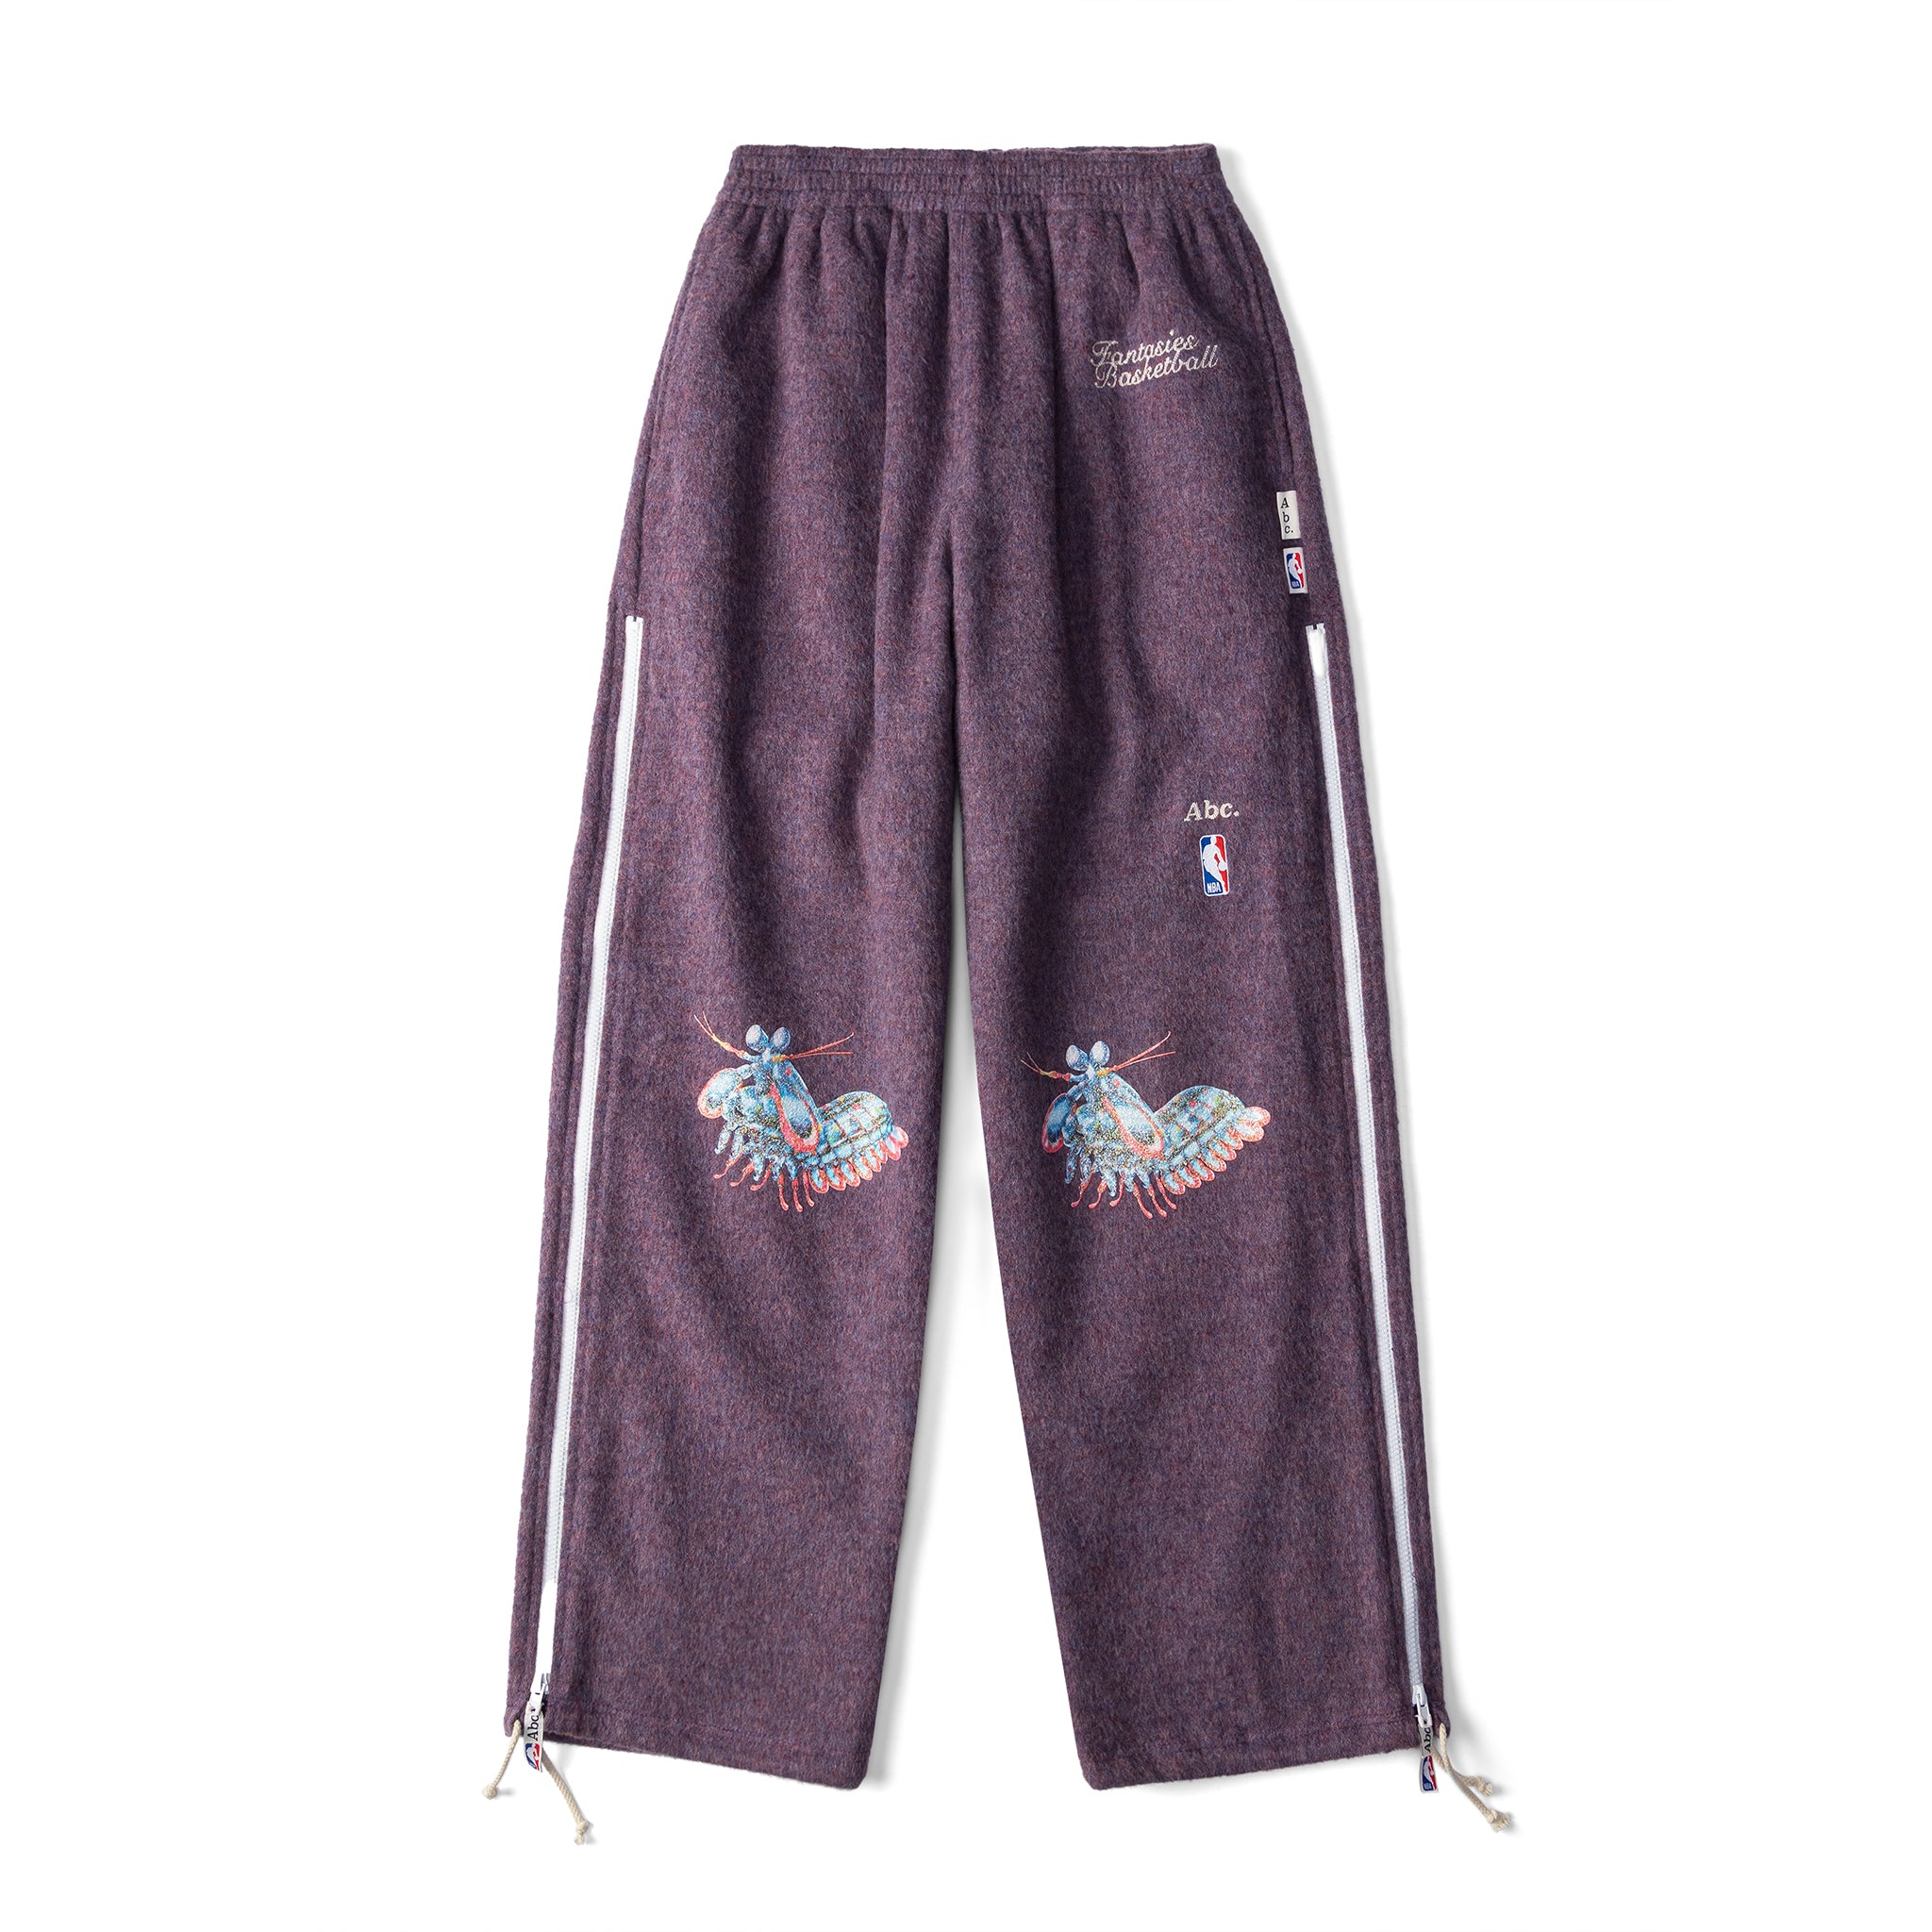 Abc. NBA Wool Warmup Pants (Purple)